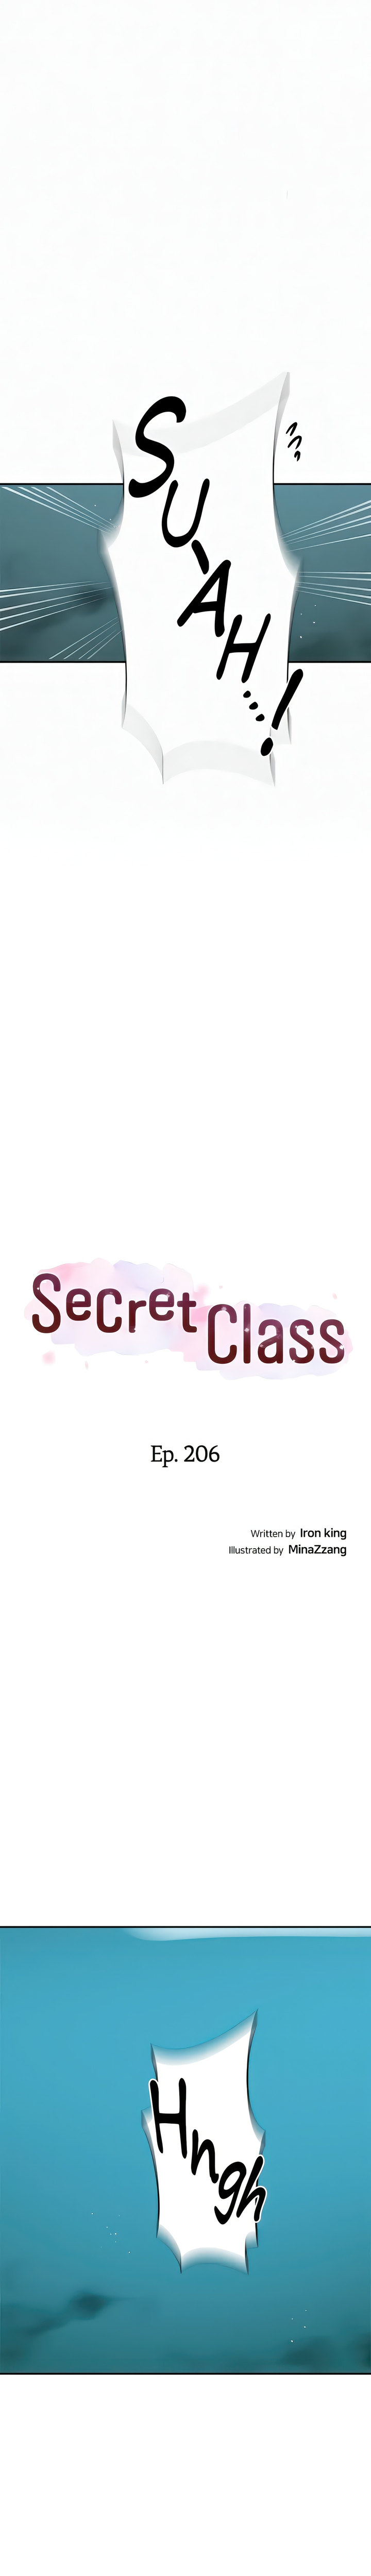 Secret Class - Chapter 206 Page 2